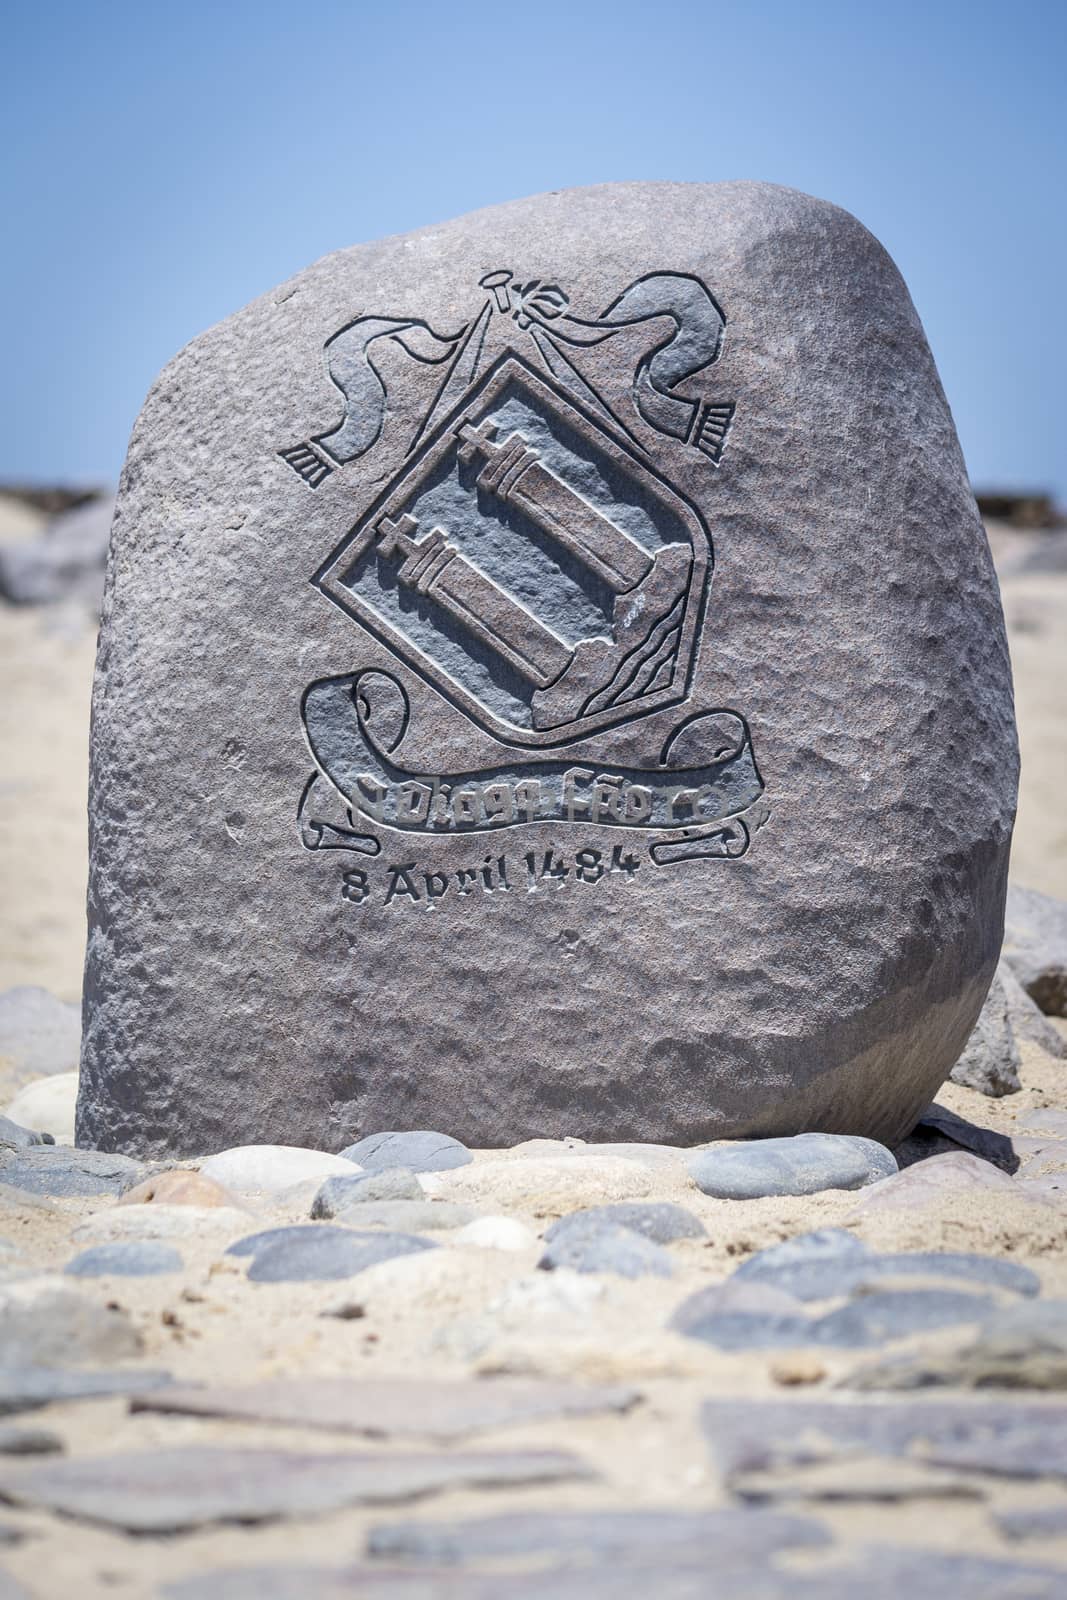 Cape Cross, Namibia, November 2012: Diogo Cao landmark stone at Cape Cross or Cabo da Cruz in Namibia